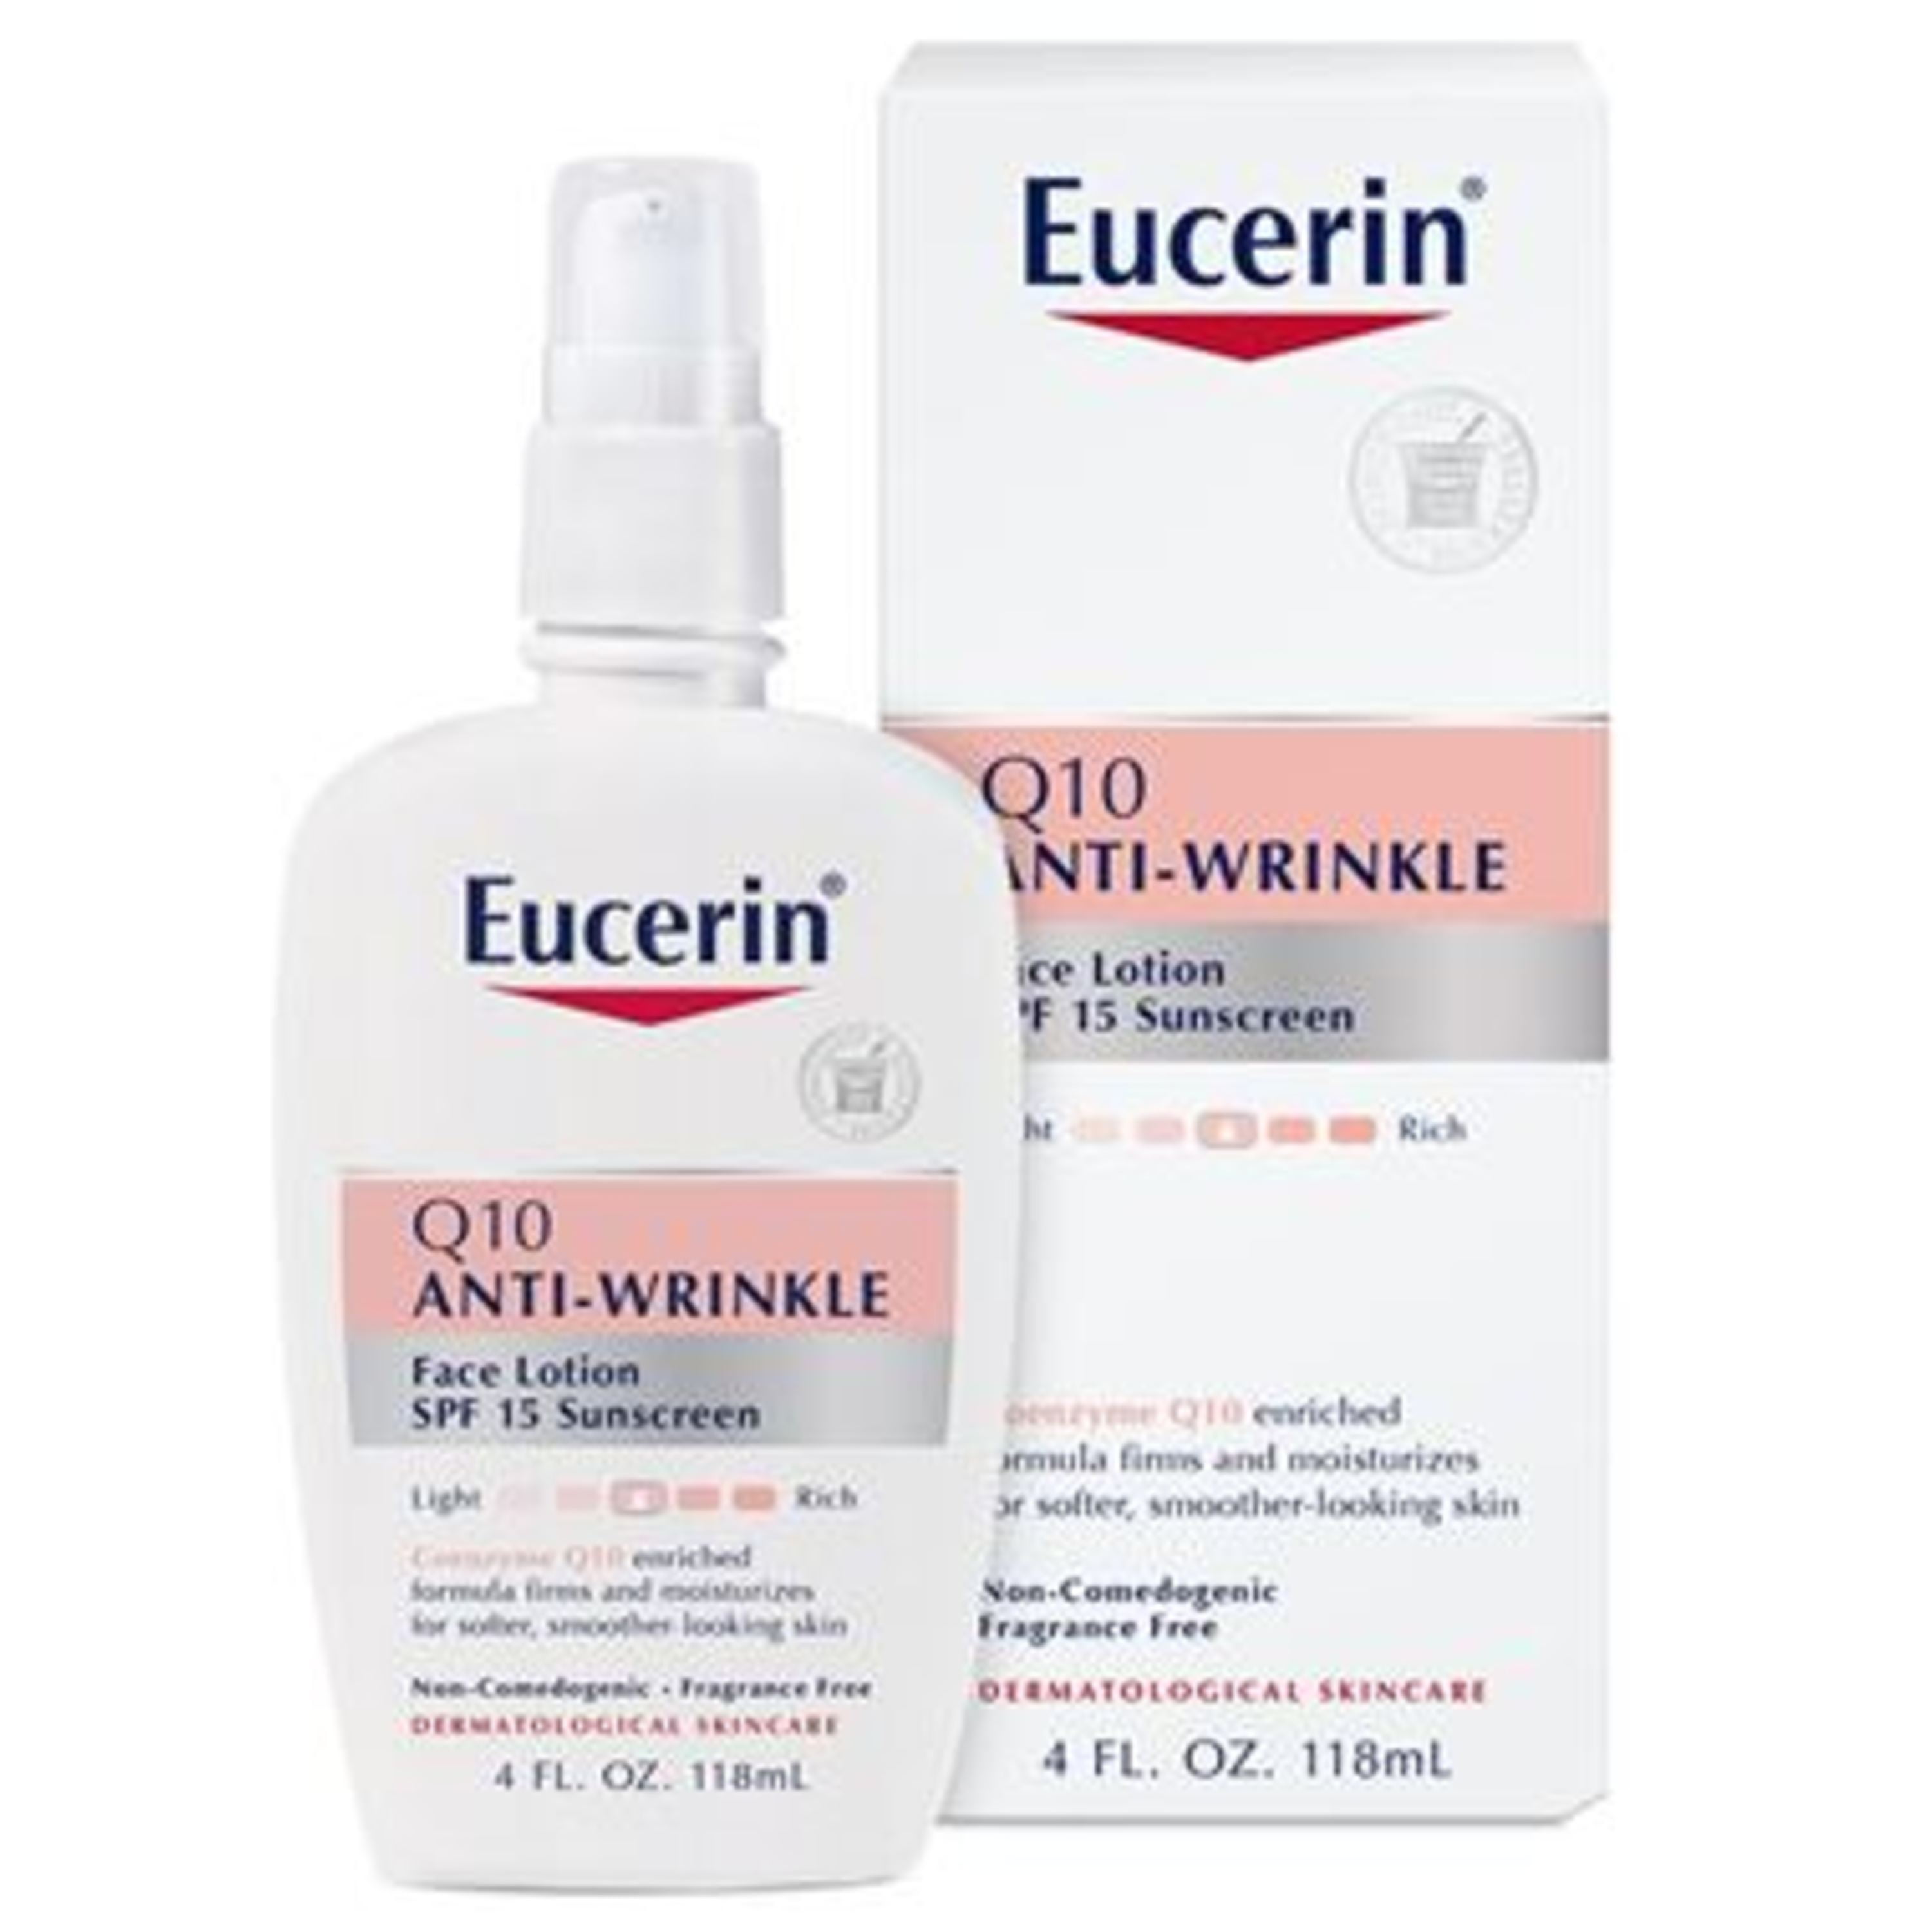 eucerin anti wrinkle cream)